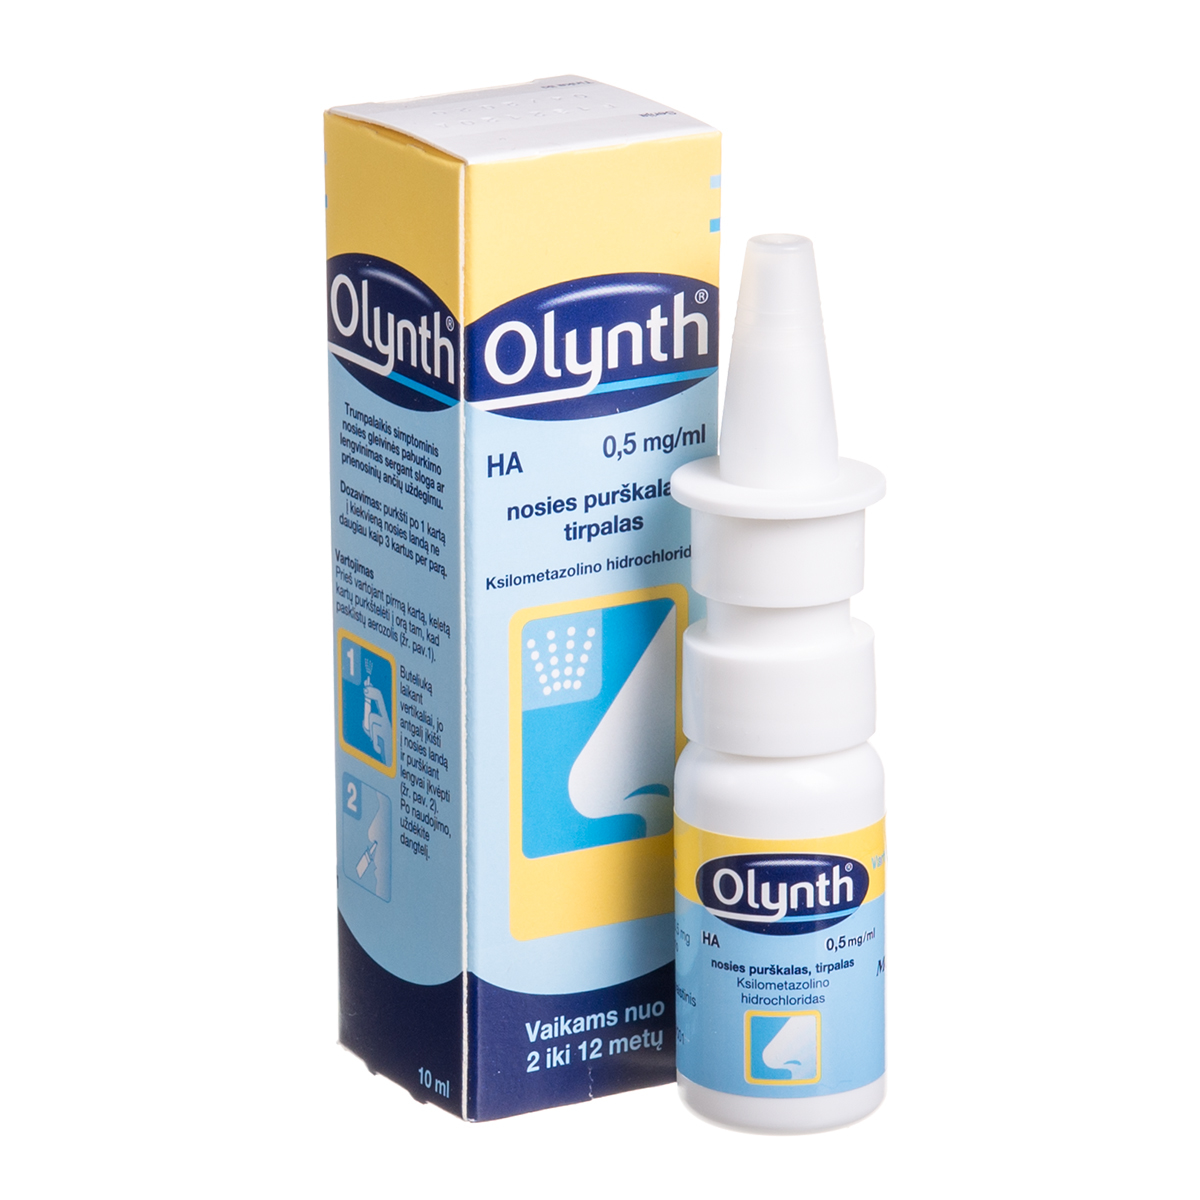 OLYNTH HA, 0,5 mg/ml, nosies purškalas (tirpalas), 10 ml